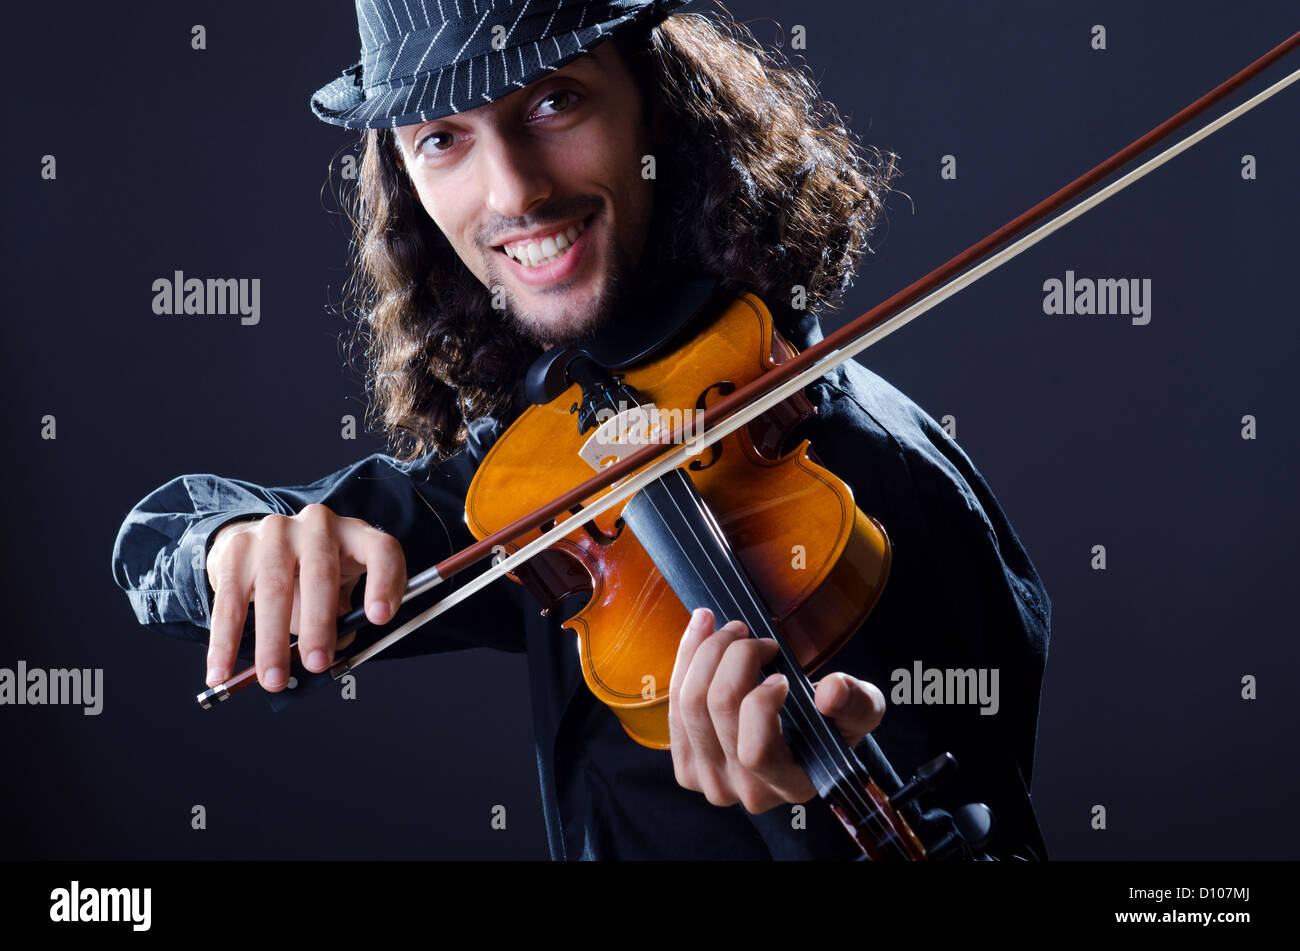 Gypsy violin player in studio Stock Photo - Alamy